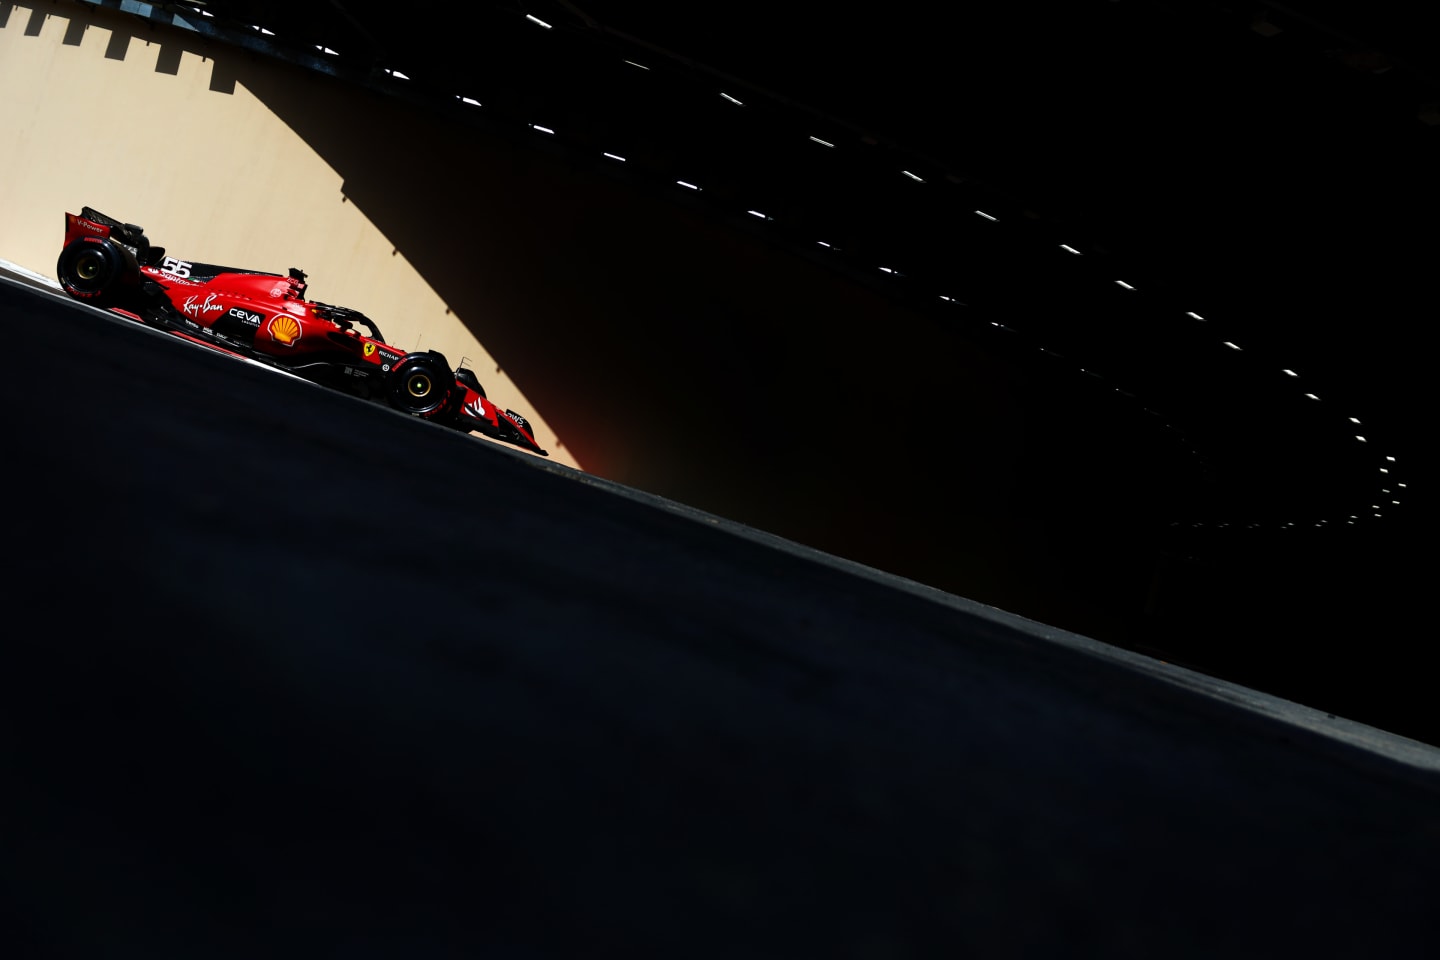 Carlos Sainz driving the Ferrari around the circuit in Abu Dhabi